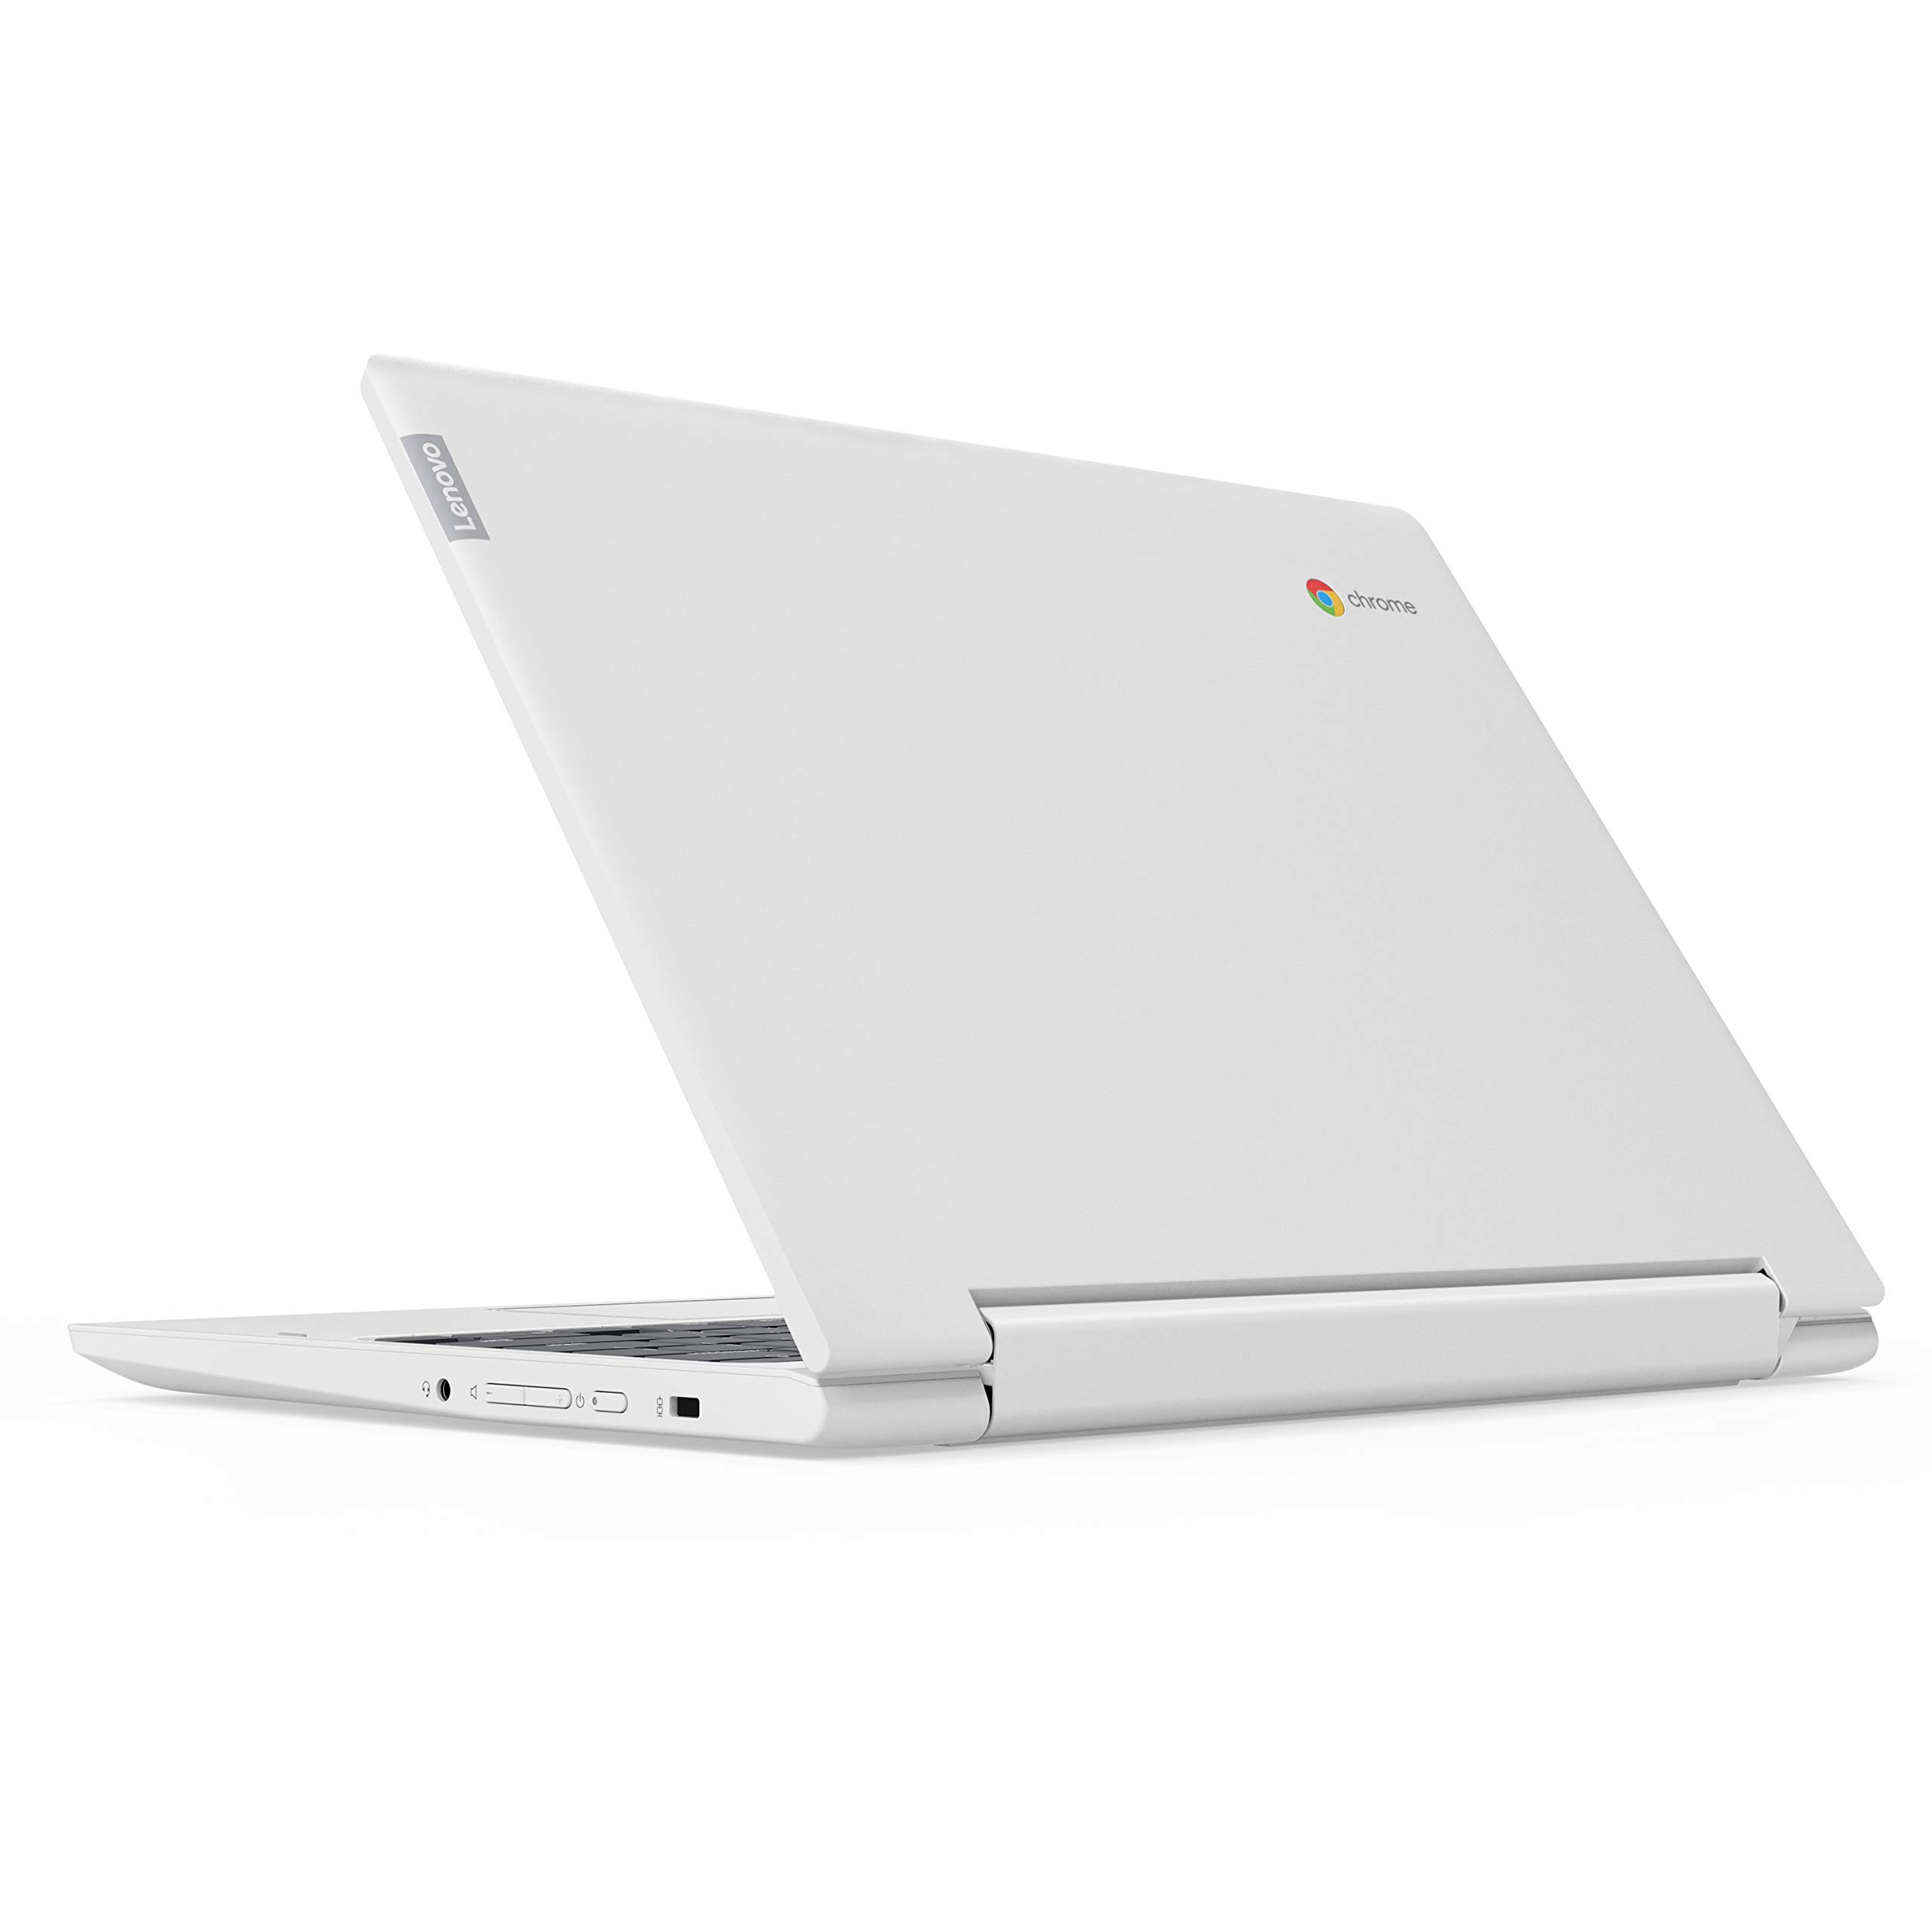 Lenovo Chromebook C330 2-in-1 Convertible Laptop, 11.6